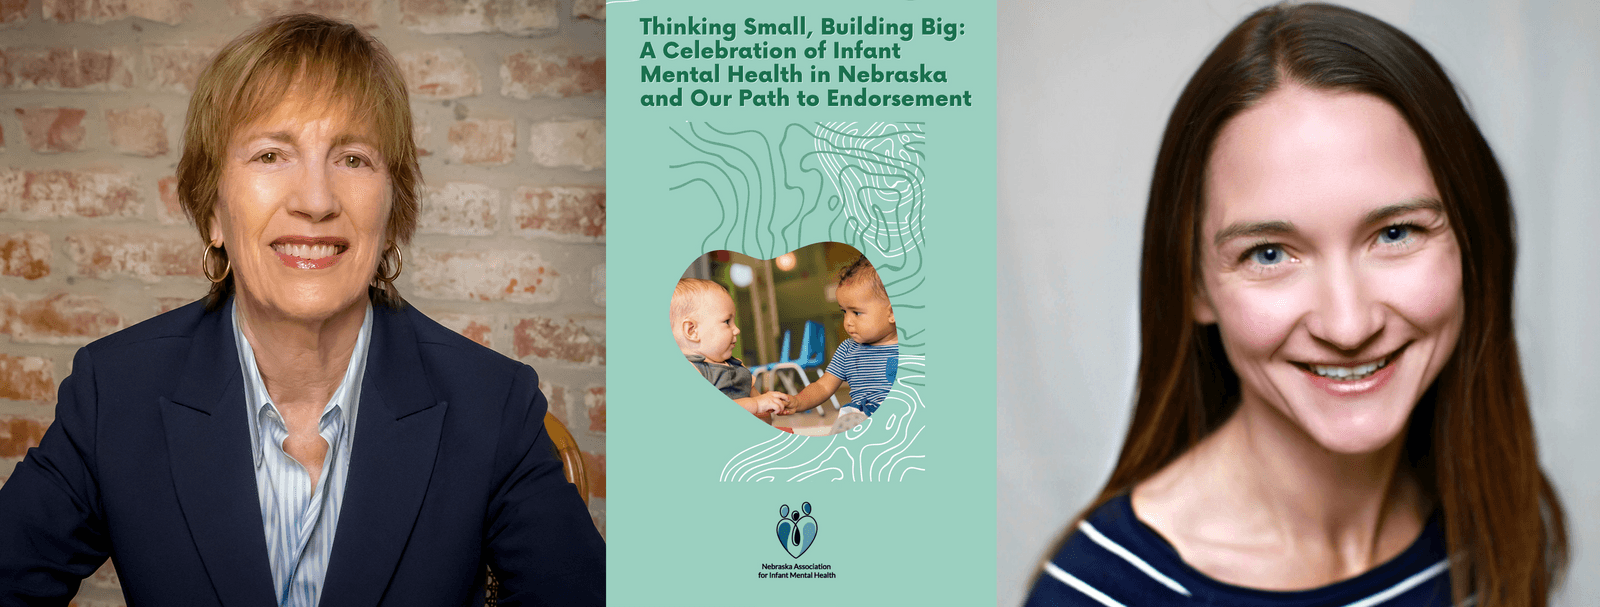 Nebraska Association of Infant Mental Health Celebrates Small Things